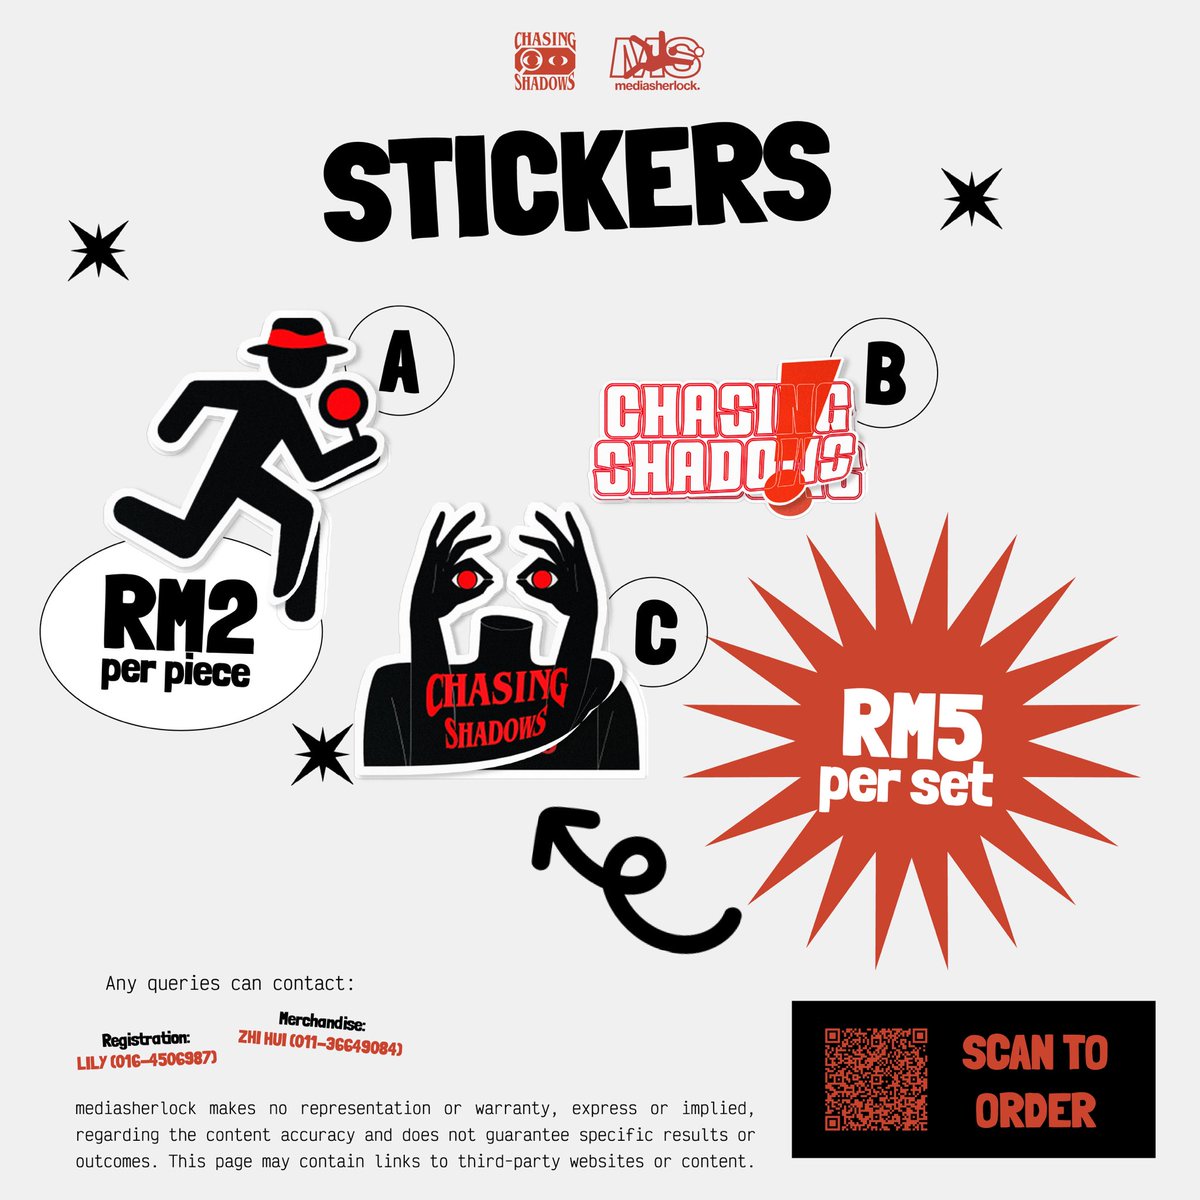 Details:
Tshirt- RM28
Stickers- RM2 (Variation: A, B, C)
Button Badge- RM5 (Variation: A, B)

COMBO PRICE:
📍 COMBO 1- RM5 per set (3 Stickers)
📍 COMBO 2- RM8 per set
(2 Button Badges)
📍 COMBO 3- RM35 per set
(1 T-Shirt, 1 Button Badge, 3 Stickers)

#UniversitiMalaya